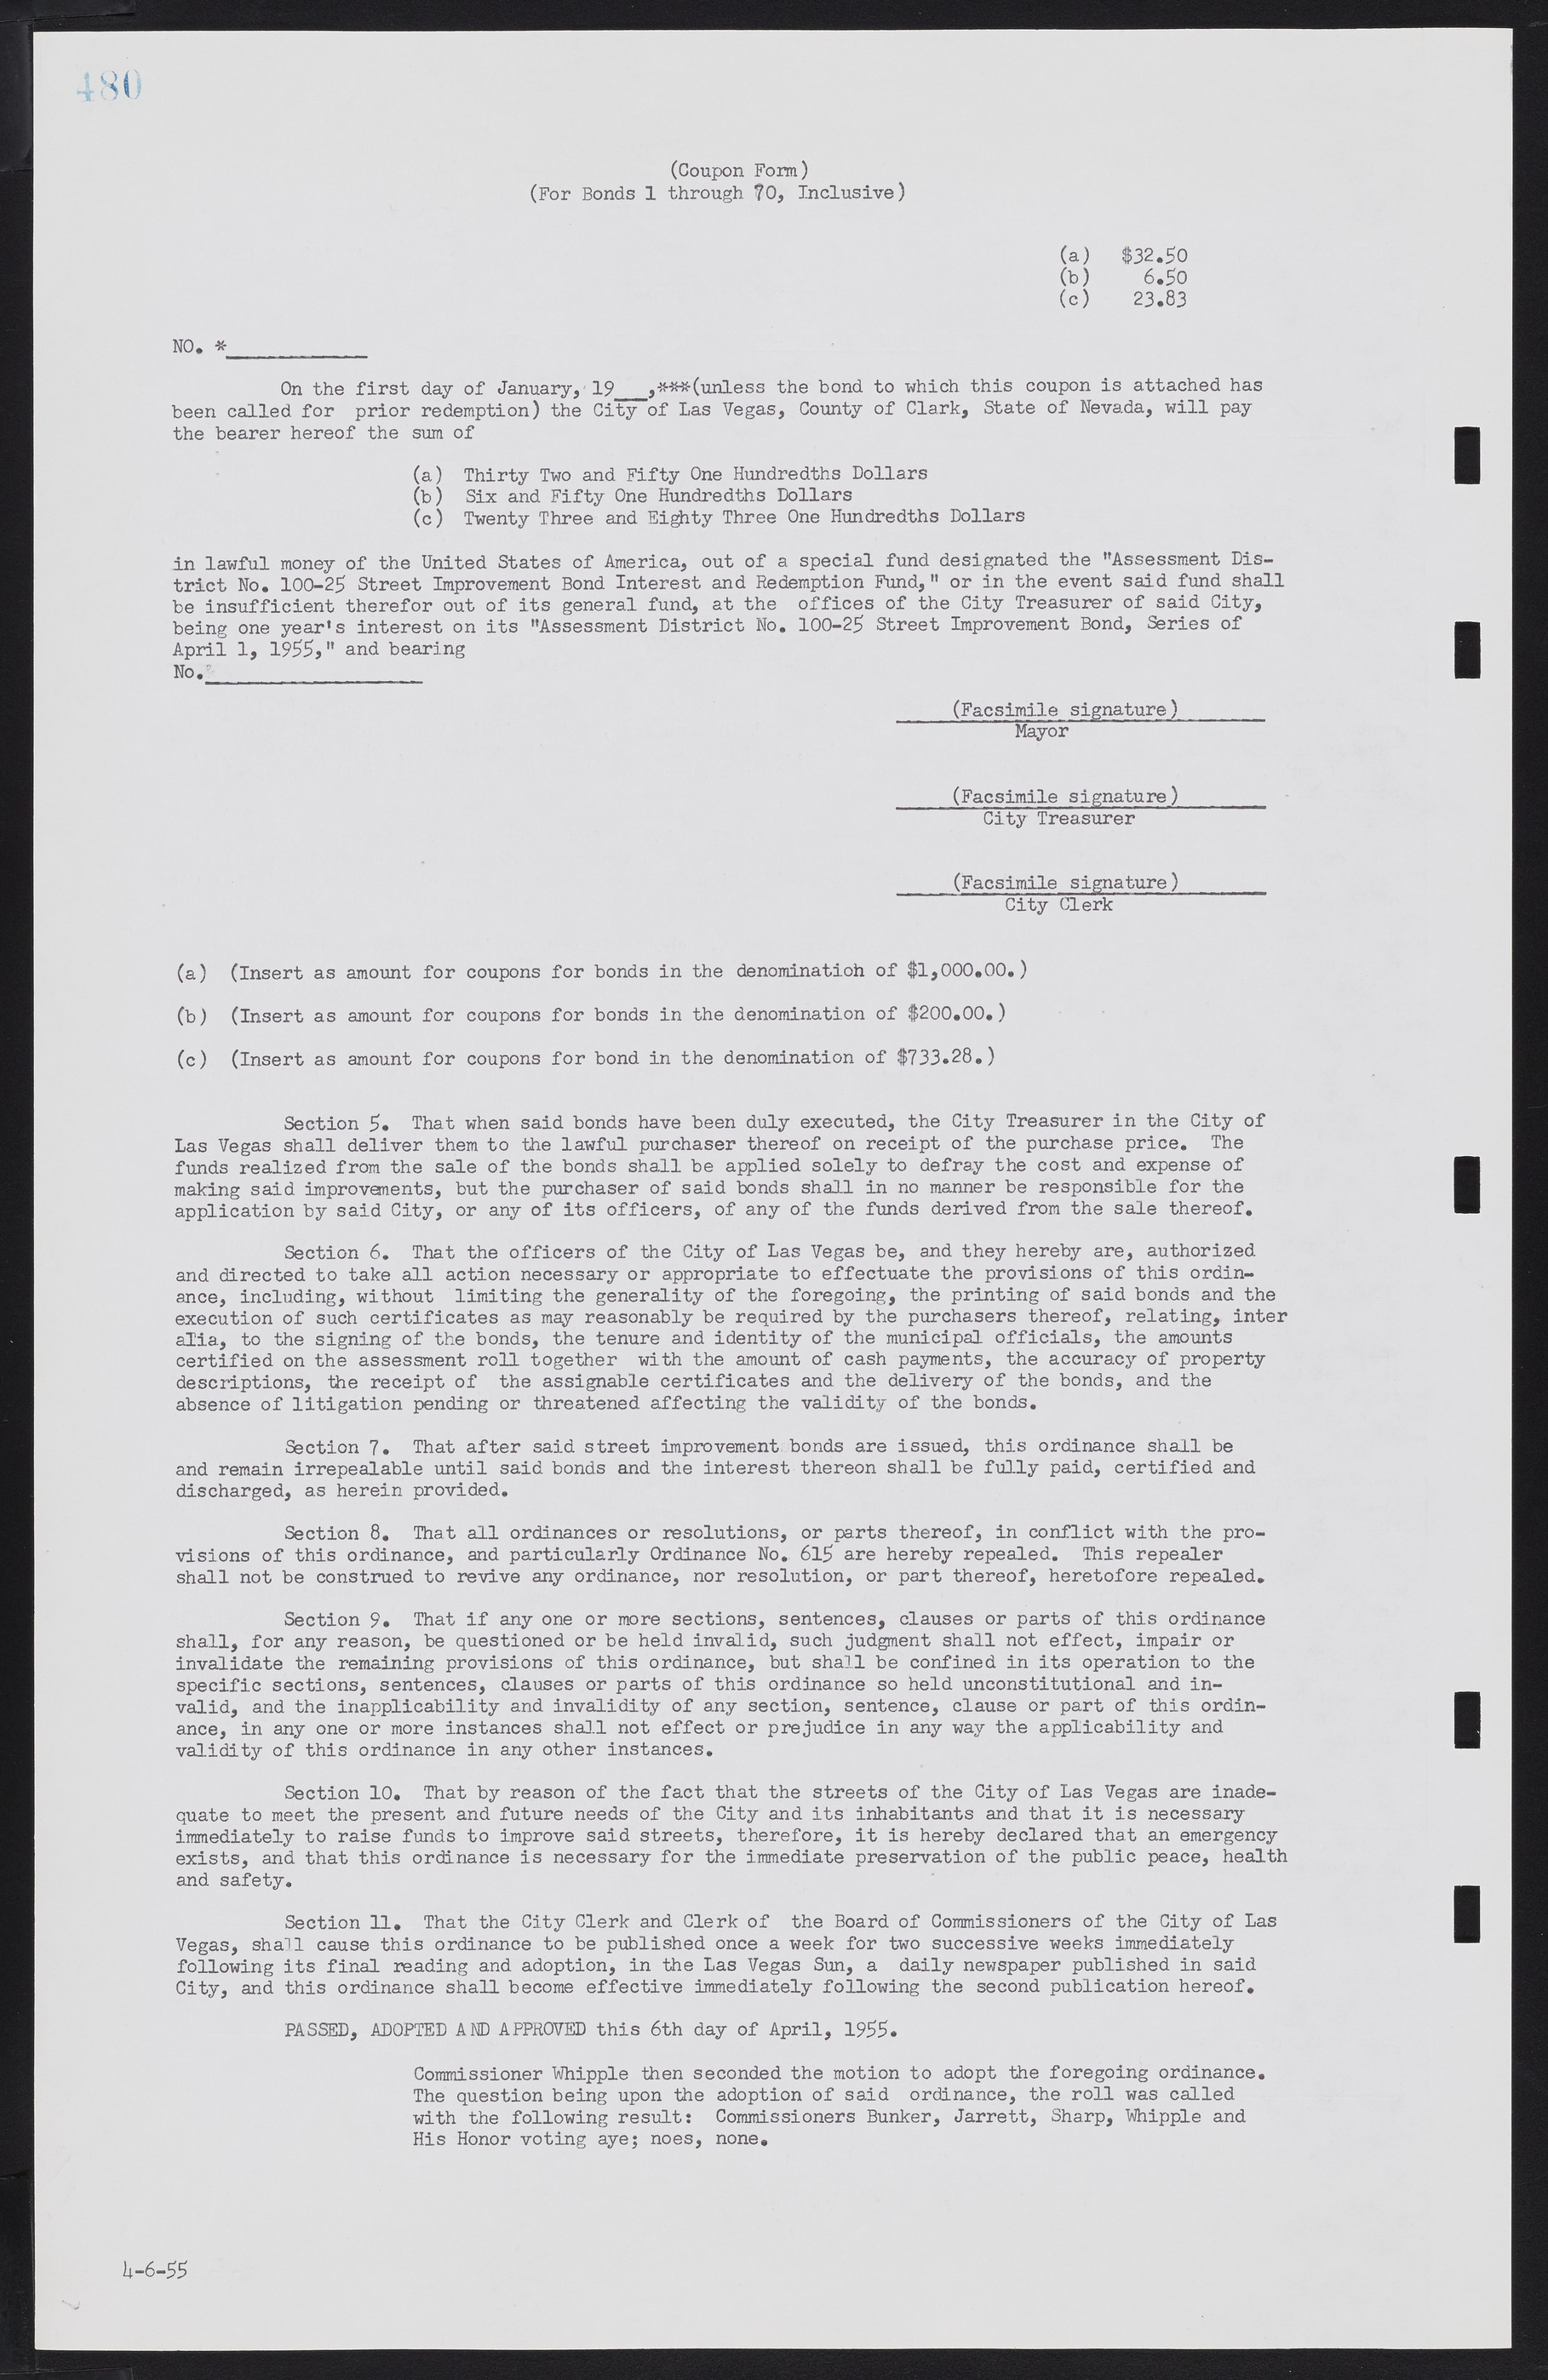 Las Vegas City Commission Minutes, February 17, 1954 to September 21, 1955, lvc000009-486